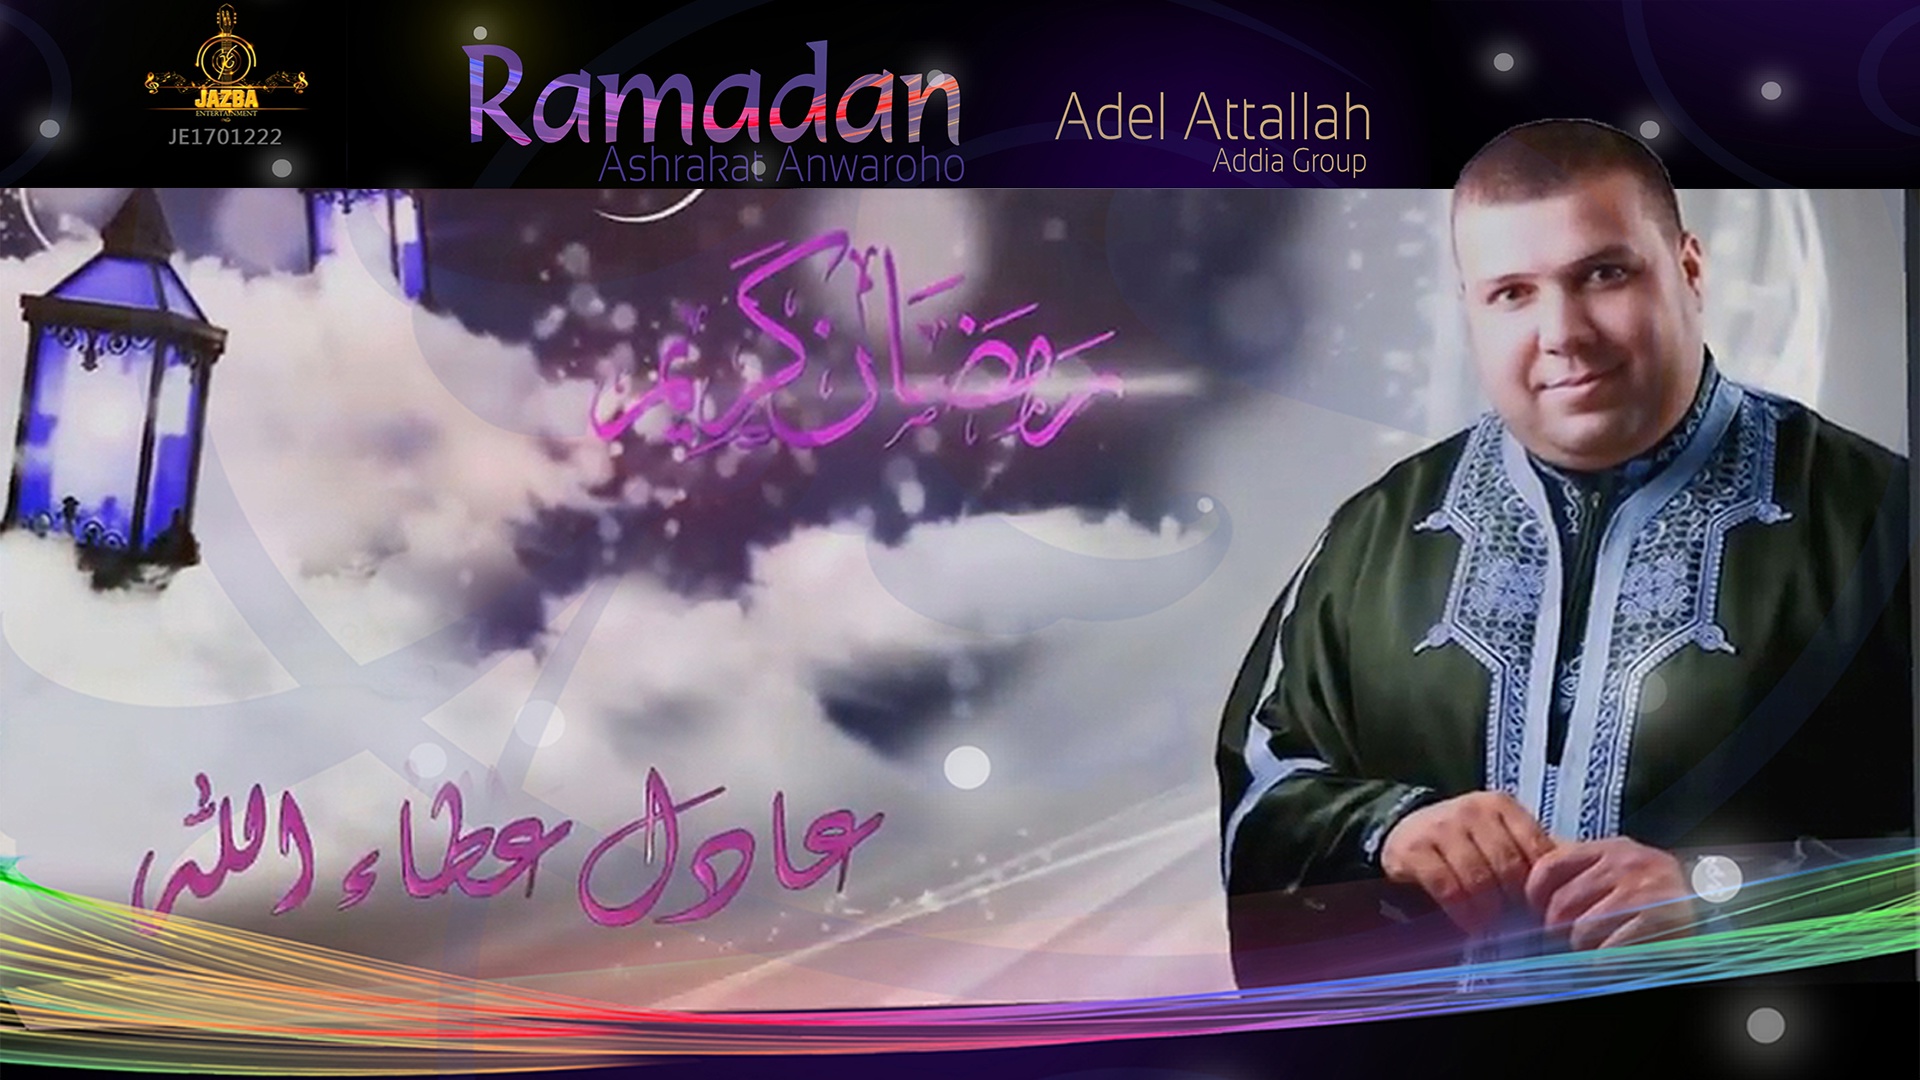 Ramadan Ashrakat Anwaroho by Adel Attallah [Addia Group